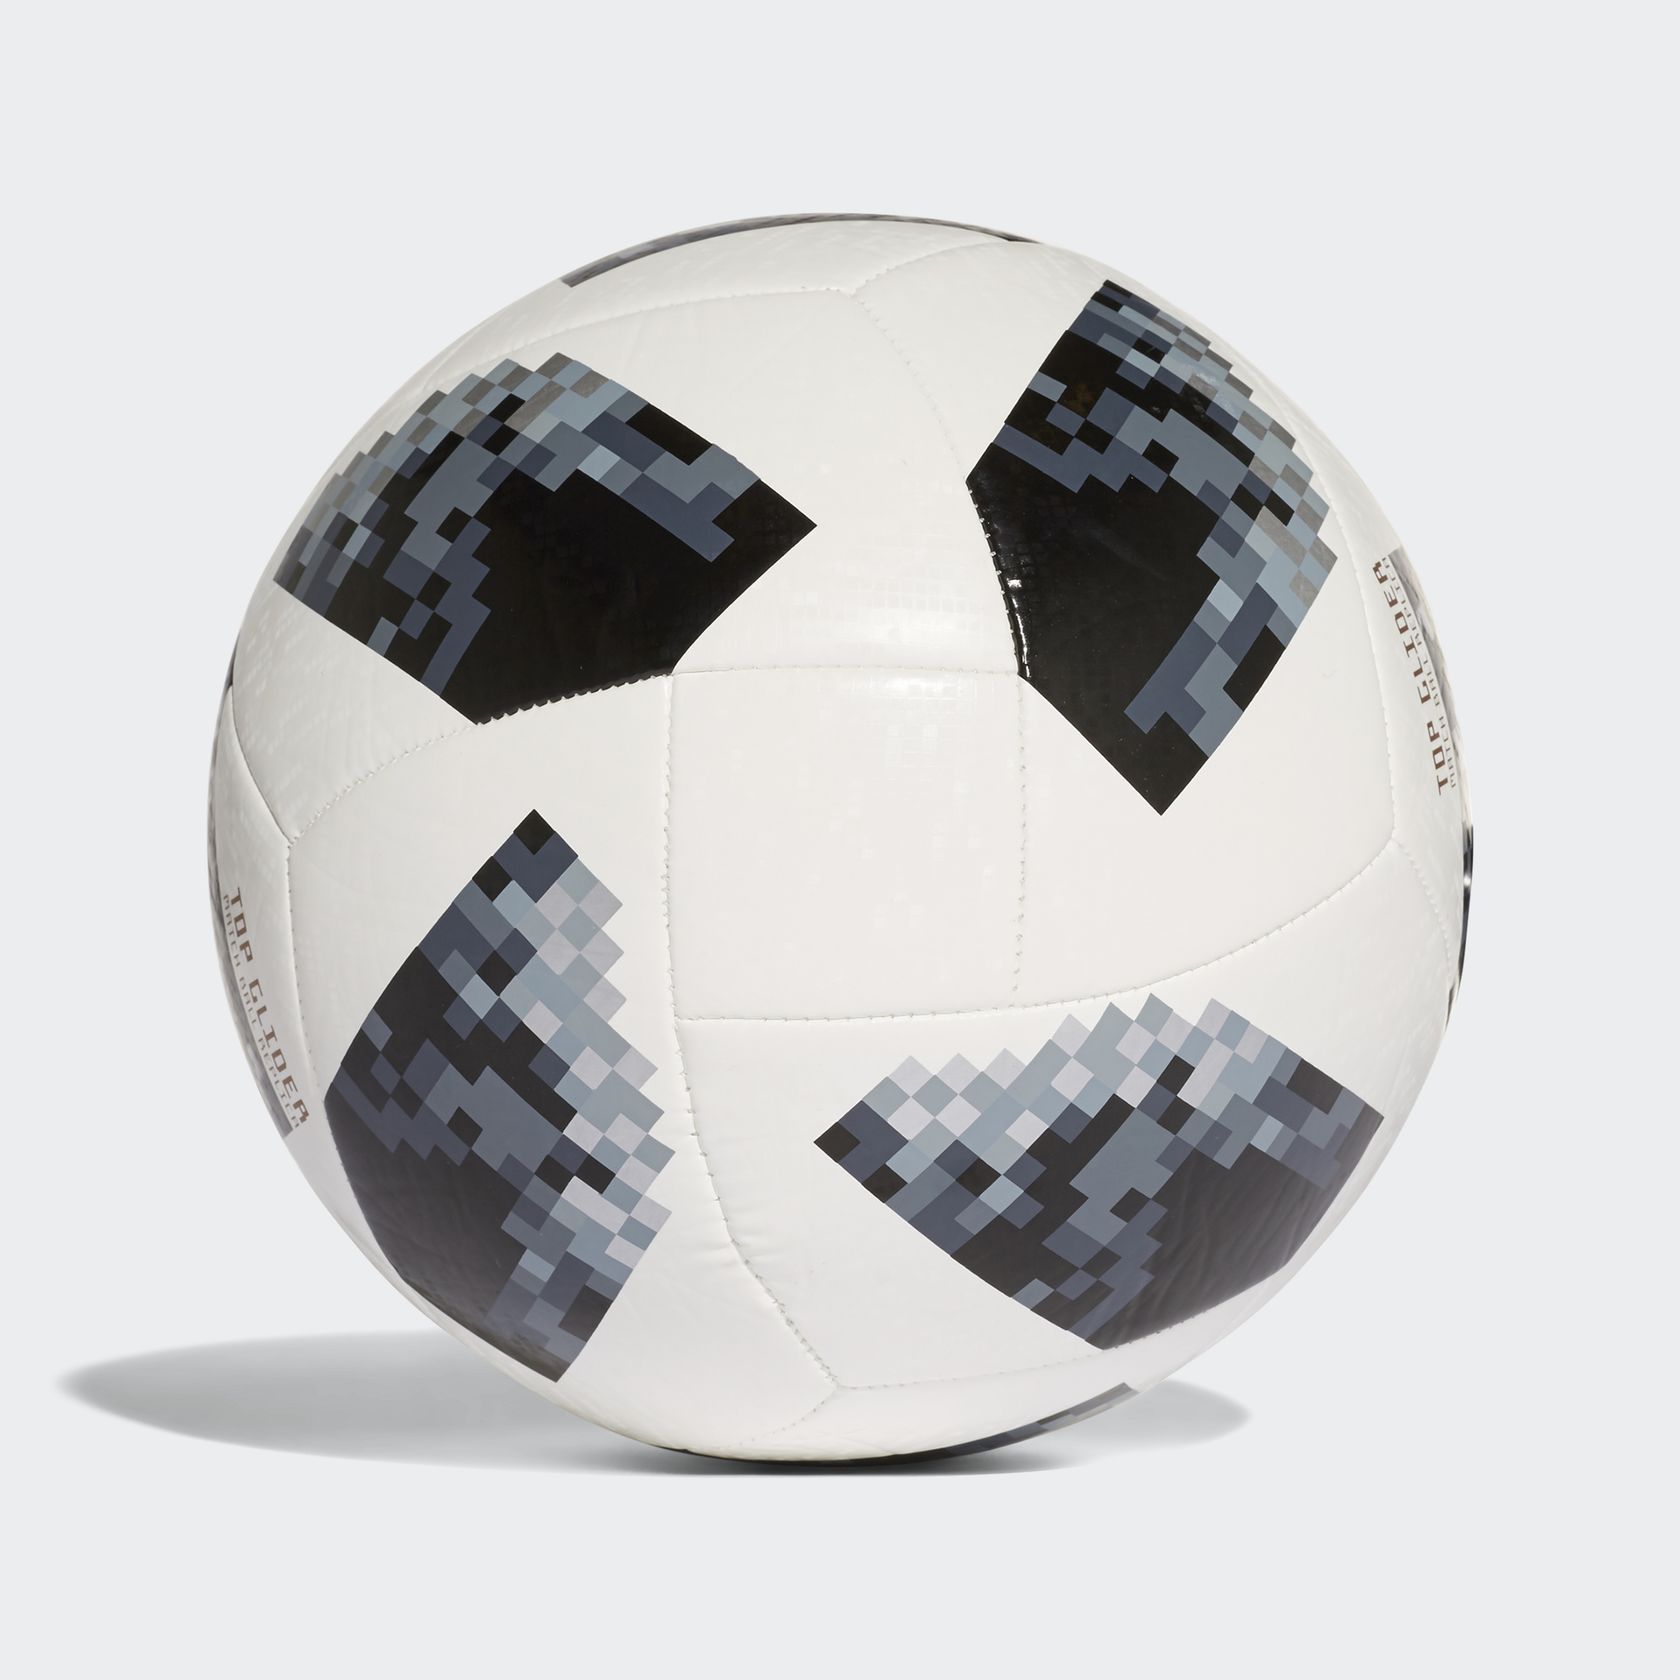 fifa world cup top glider ball